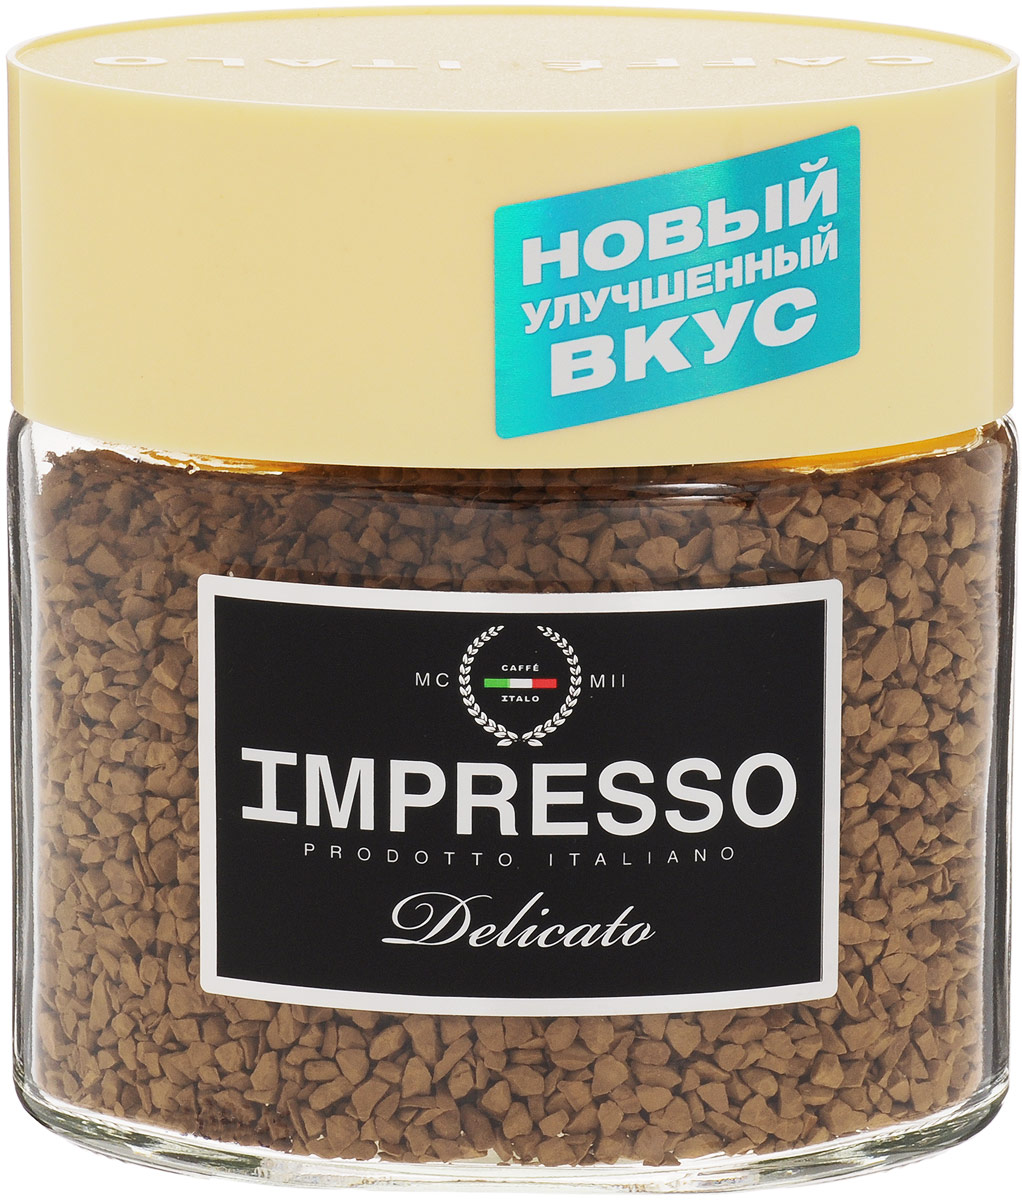 Impresso Delicato кофе растворимый, 100 г (банка)